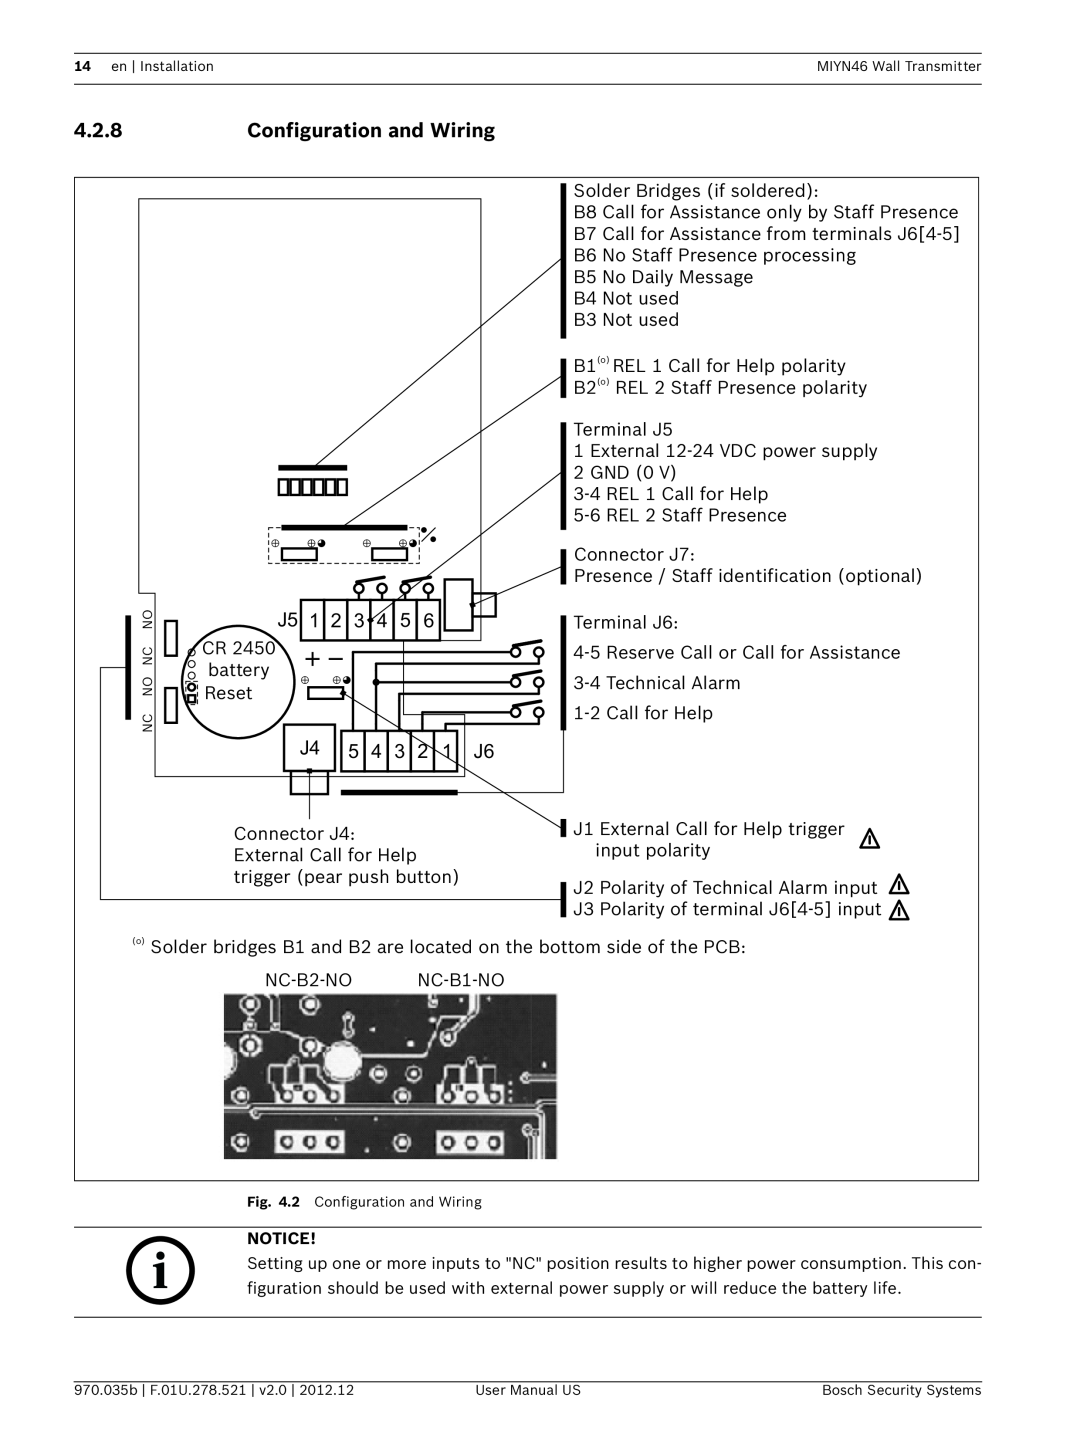 Bosch Appliances MIYN46 user manual 4.2.8, Configuration and Wiring 